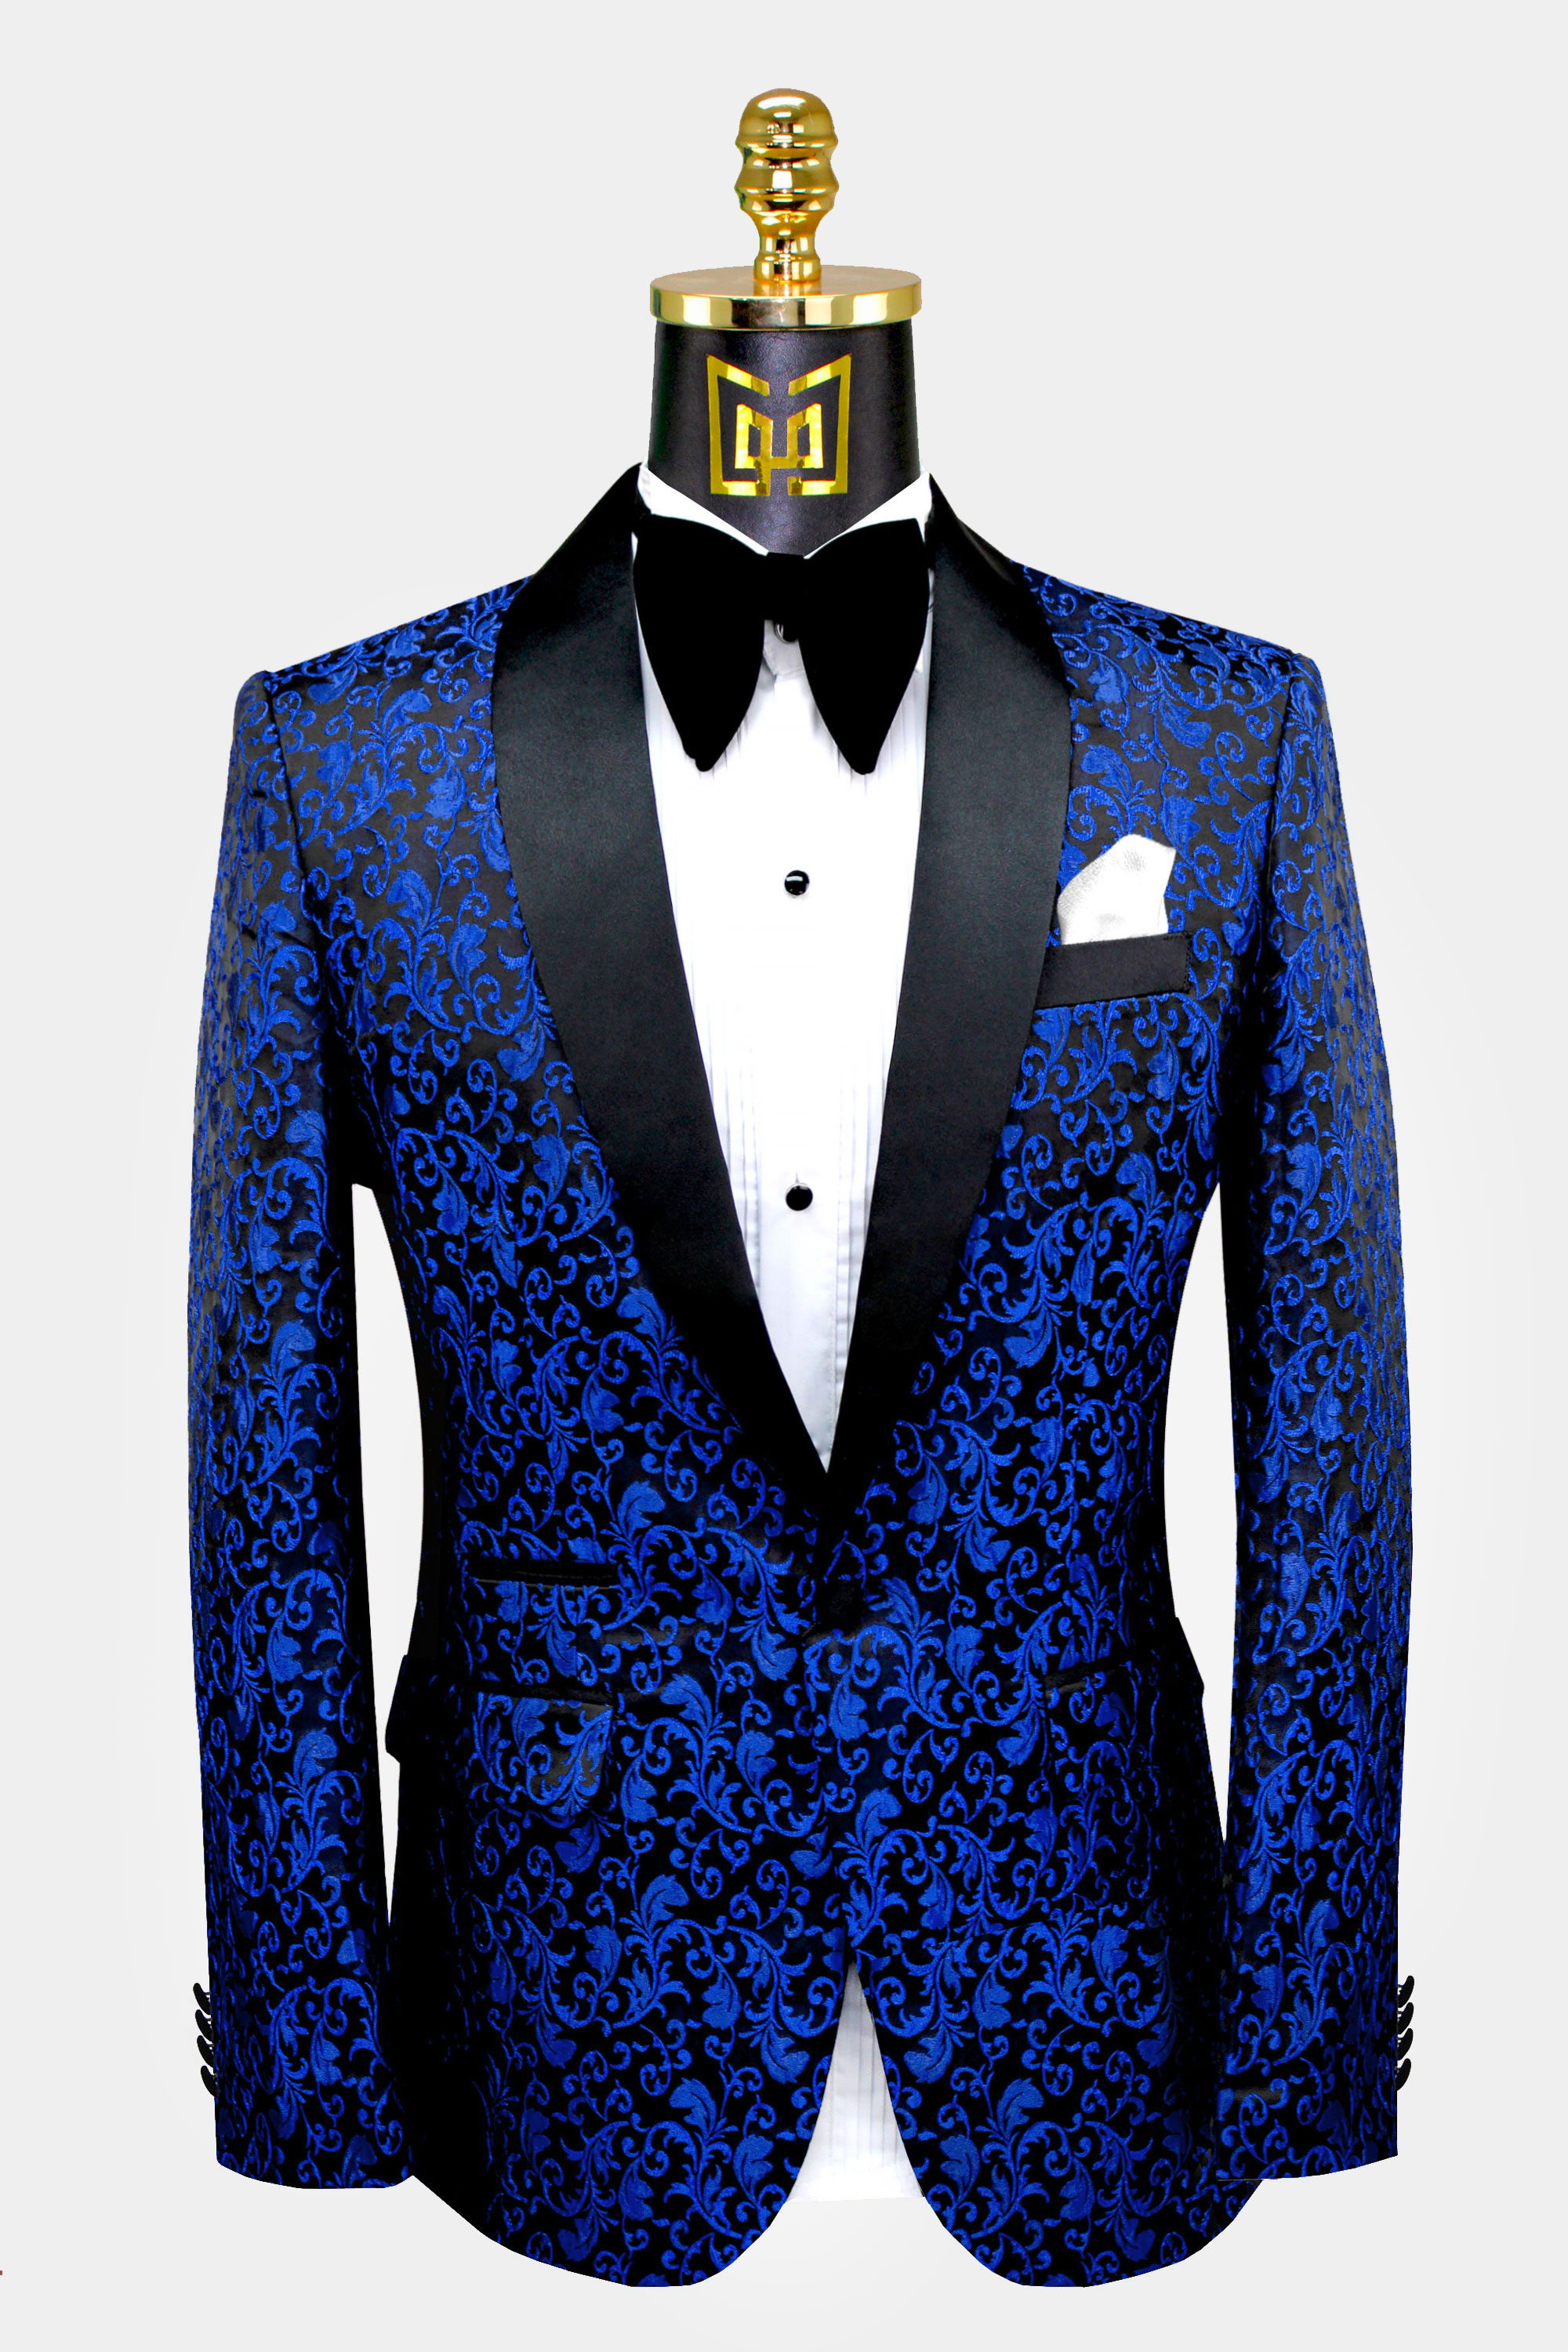 Mens-Royal-Blue-Paisley-Tuxedo-Jacket-Wedding-Groom-Prom-Blazer-from-Gentlemansguru.com